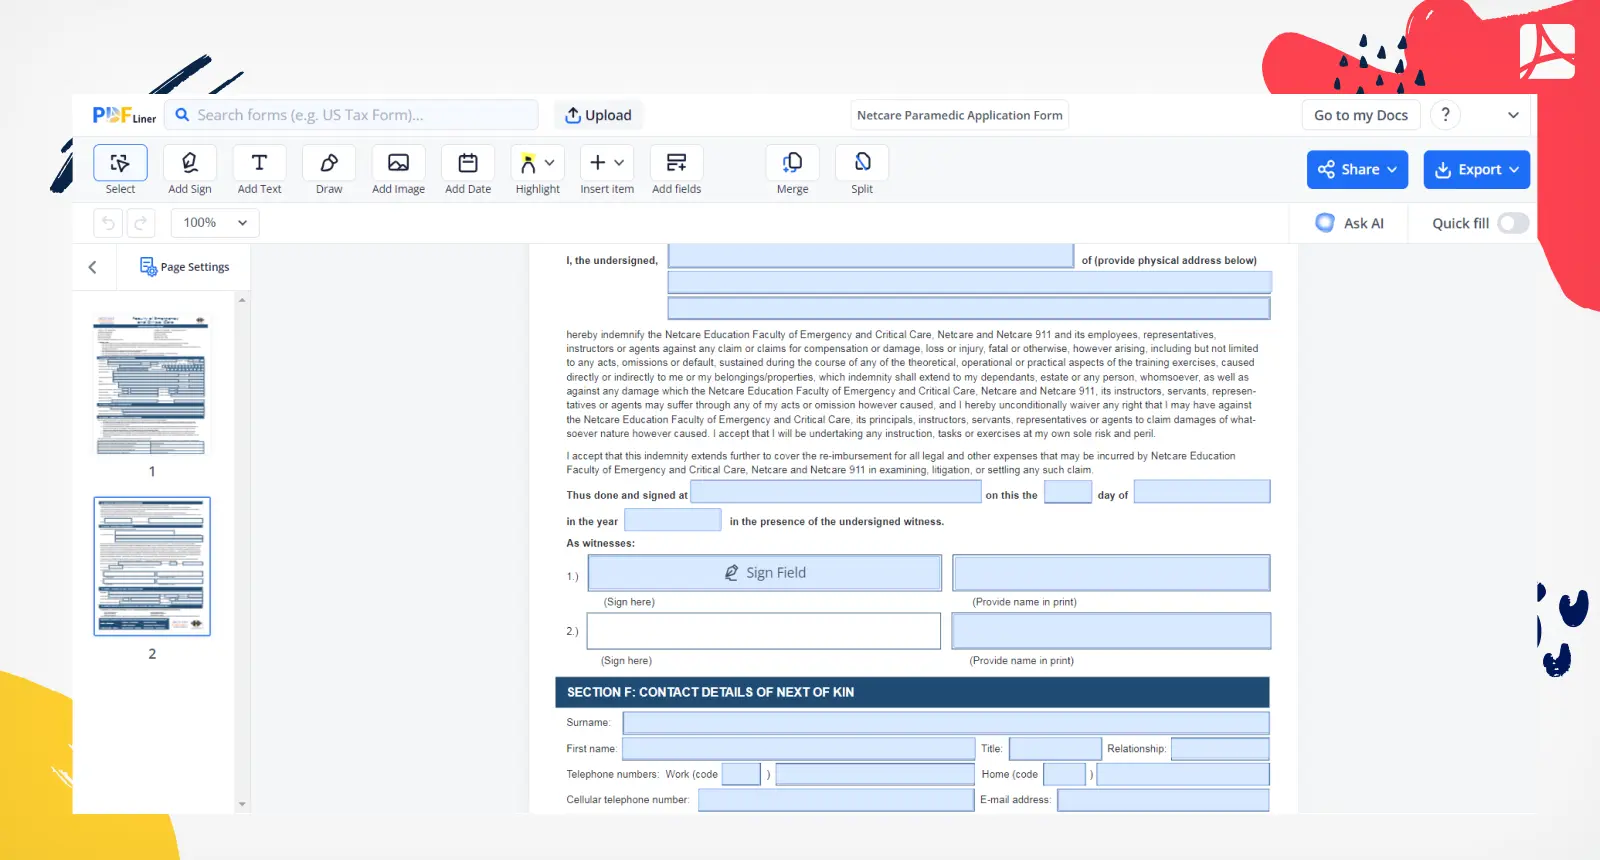 Netcare Paramedic Application Form Template Screenshot